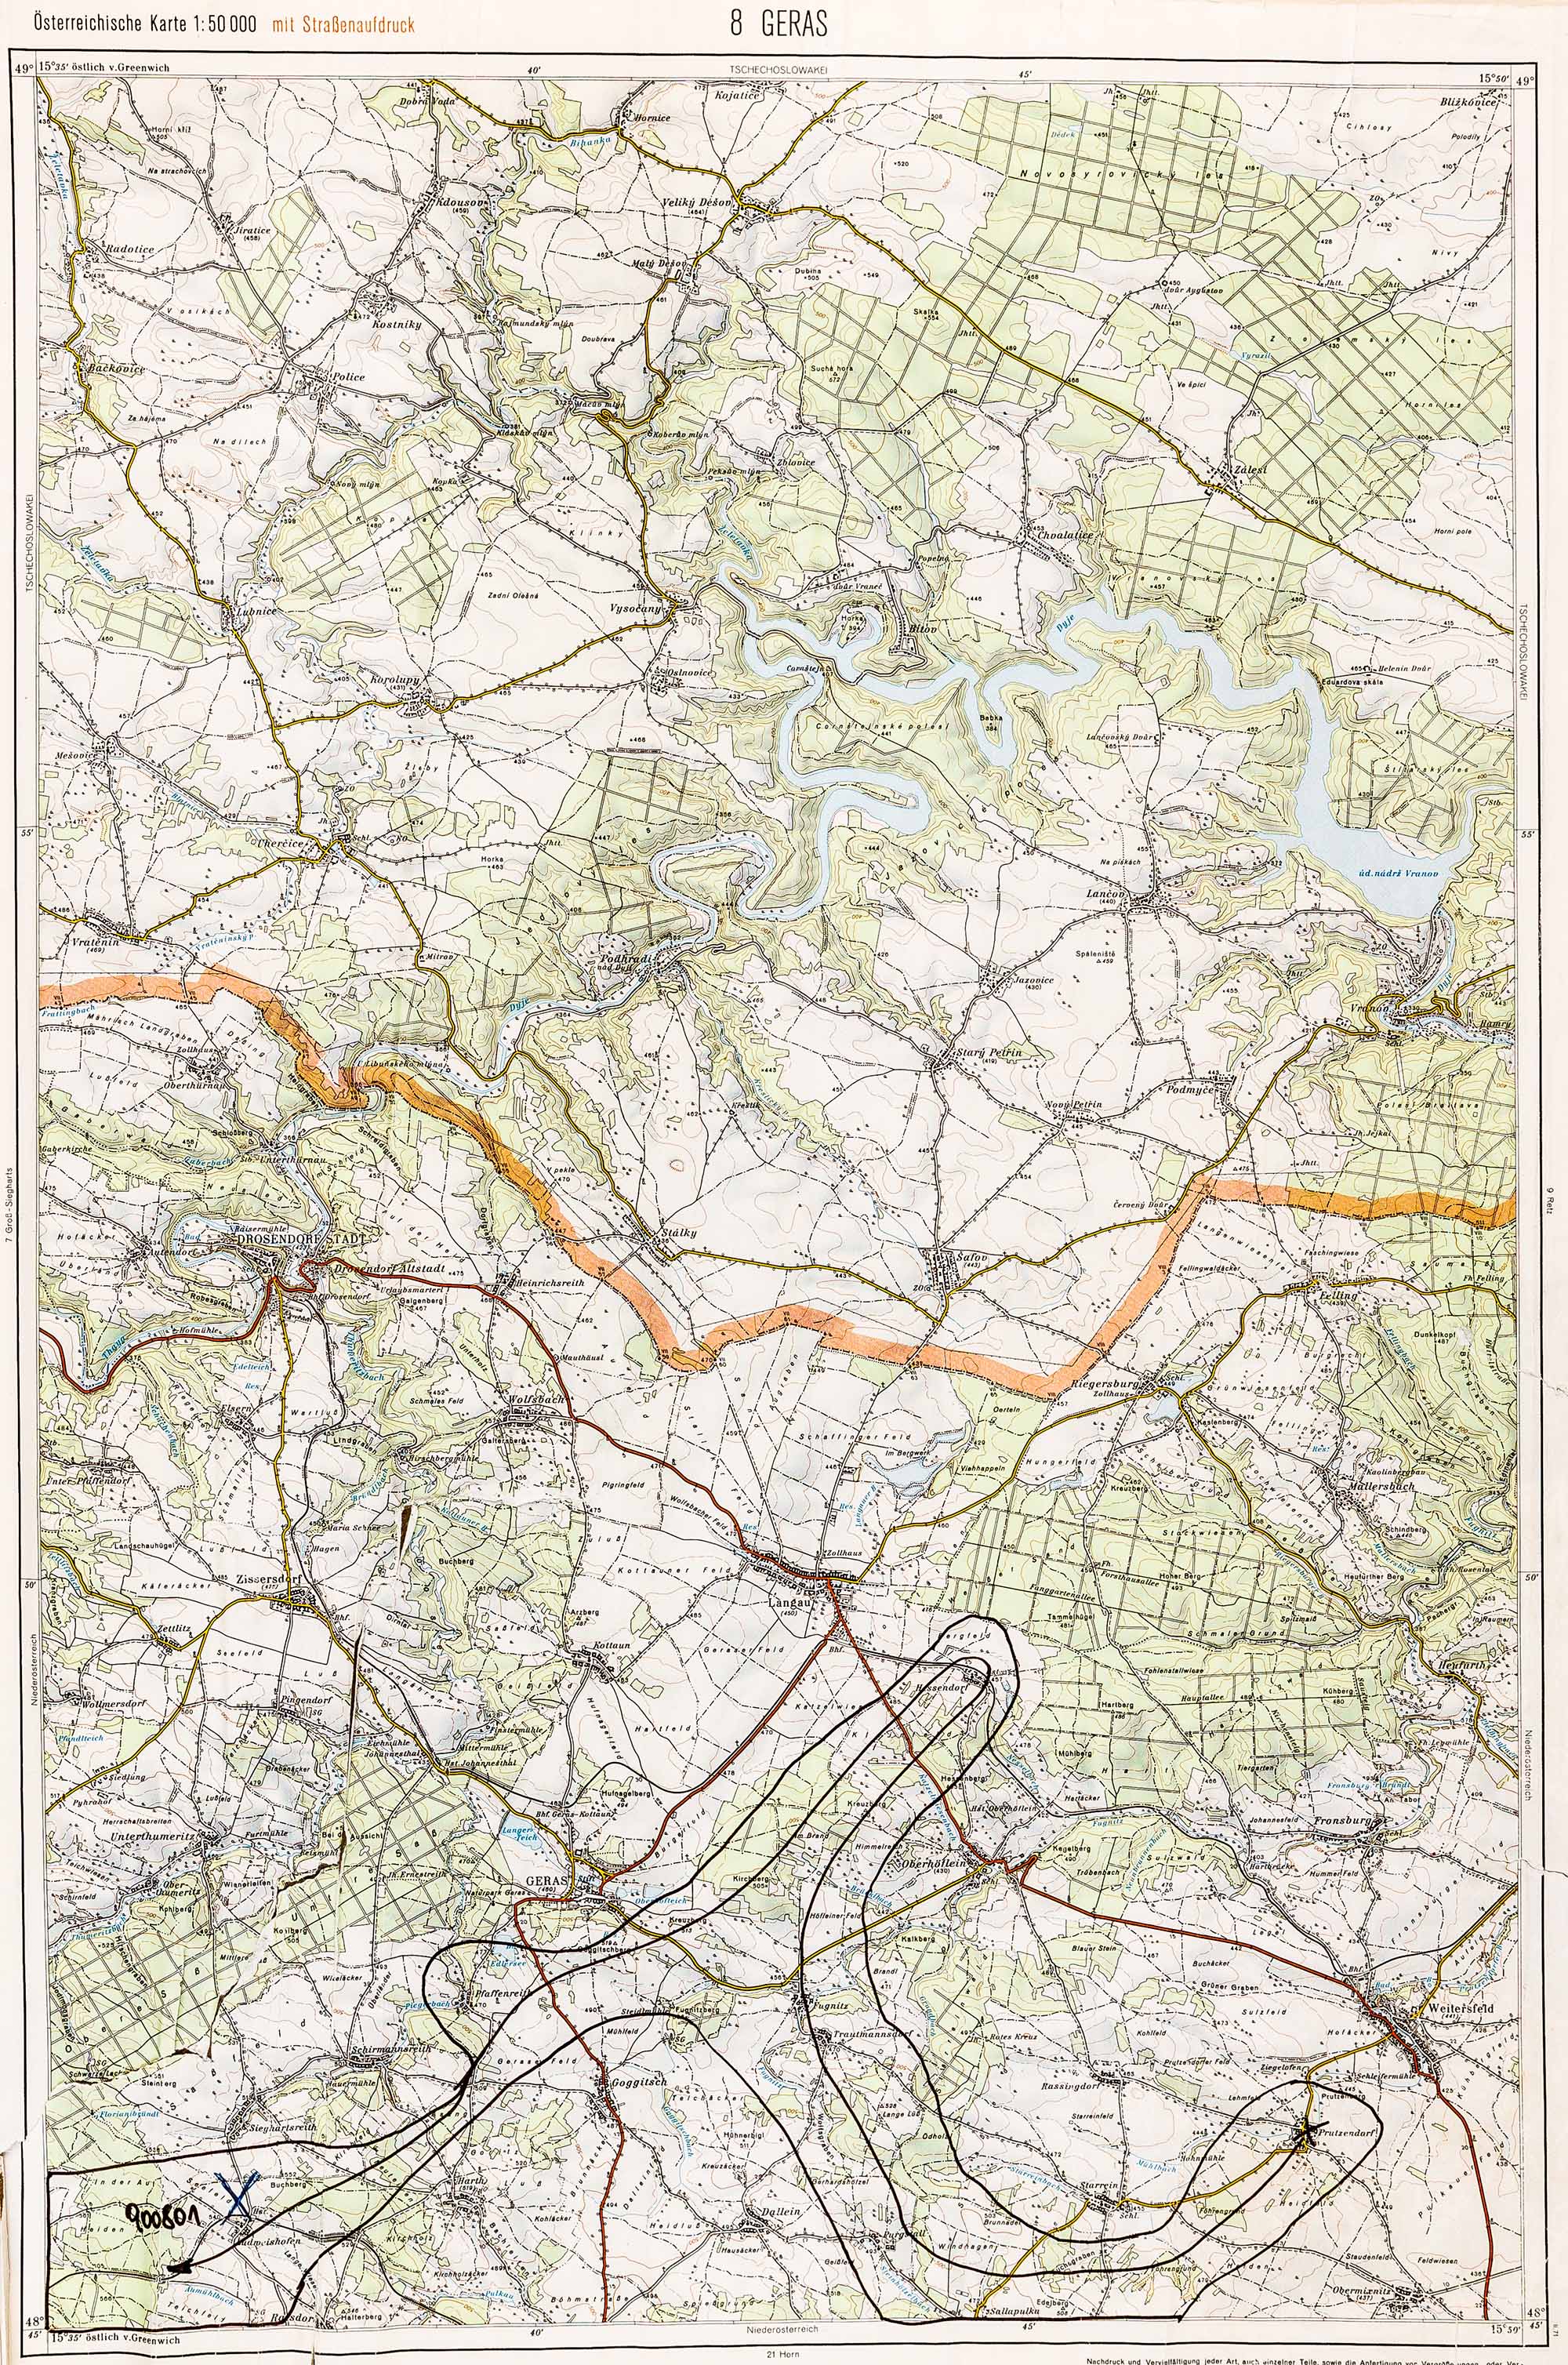 1975-1979 Karte 008